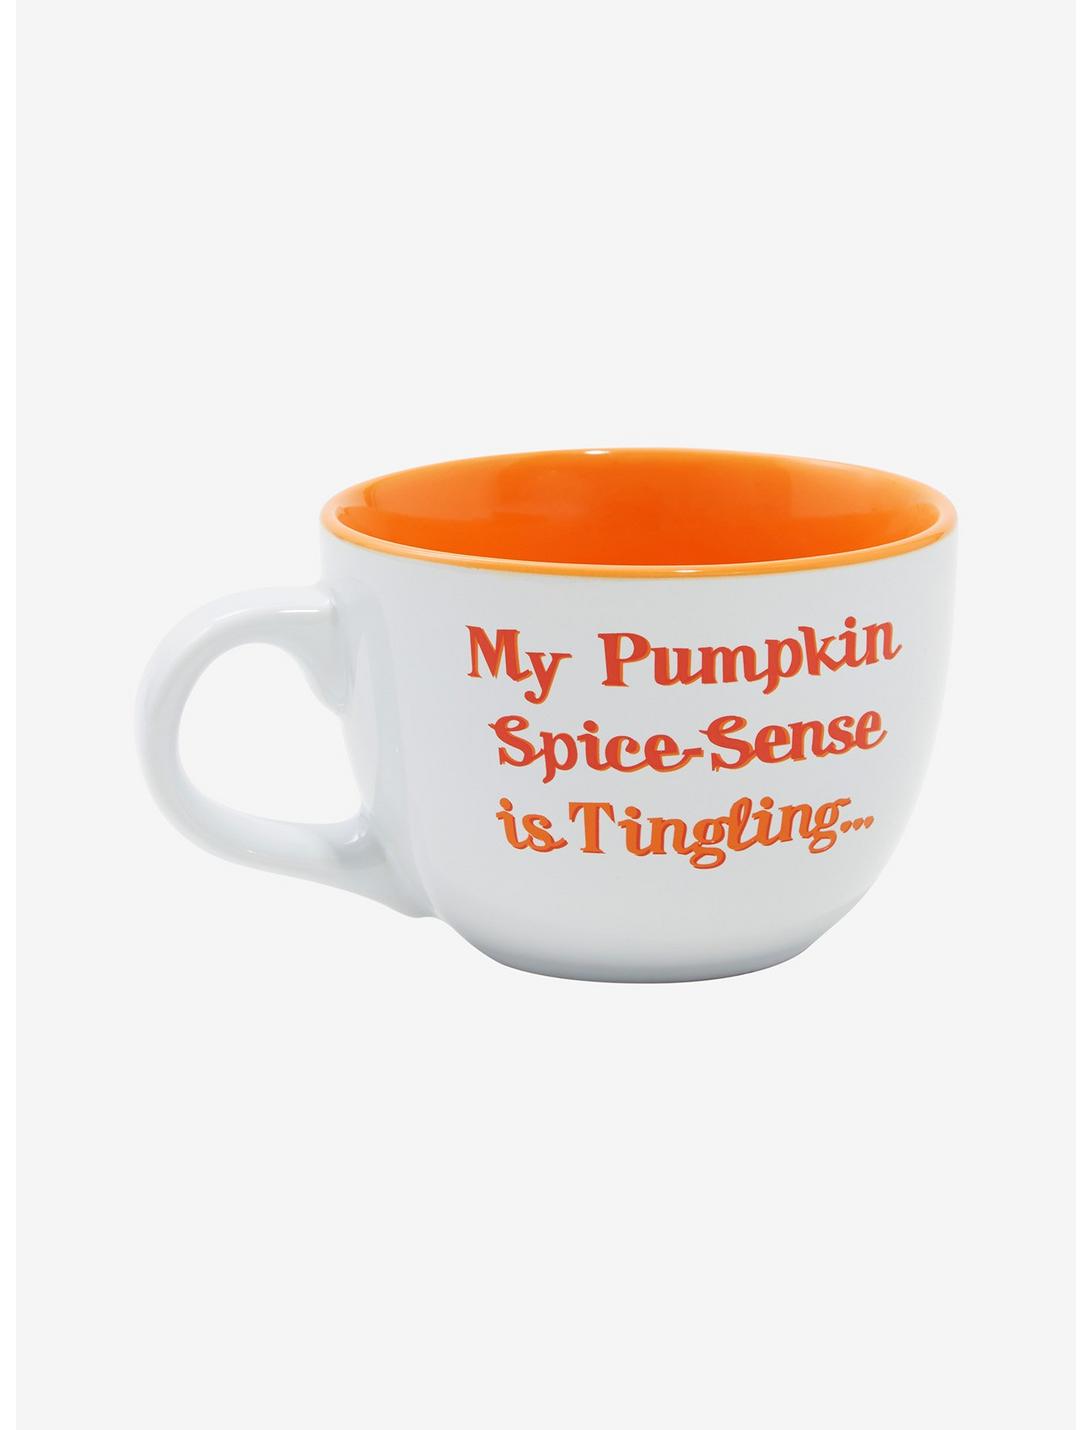 Marvel Spider-Man Pumpkin Spice-Sense Mug, , hi-res